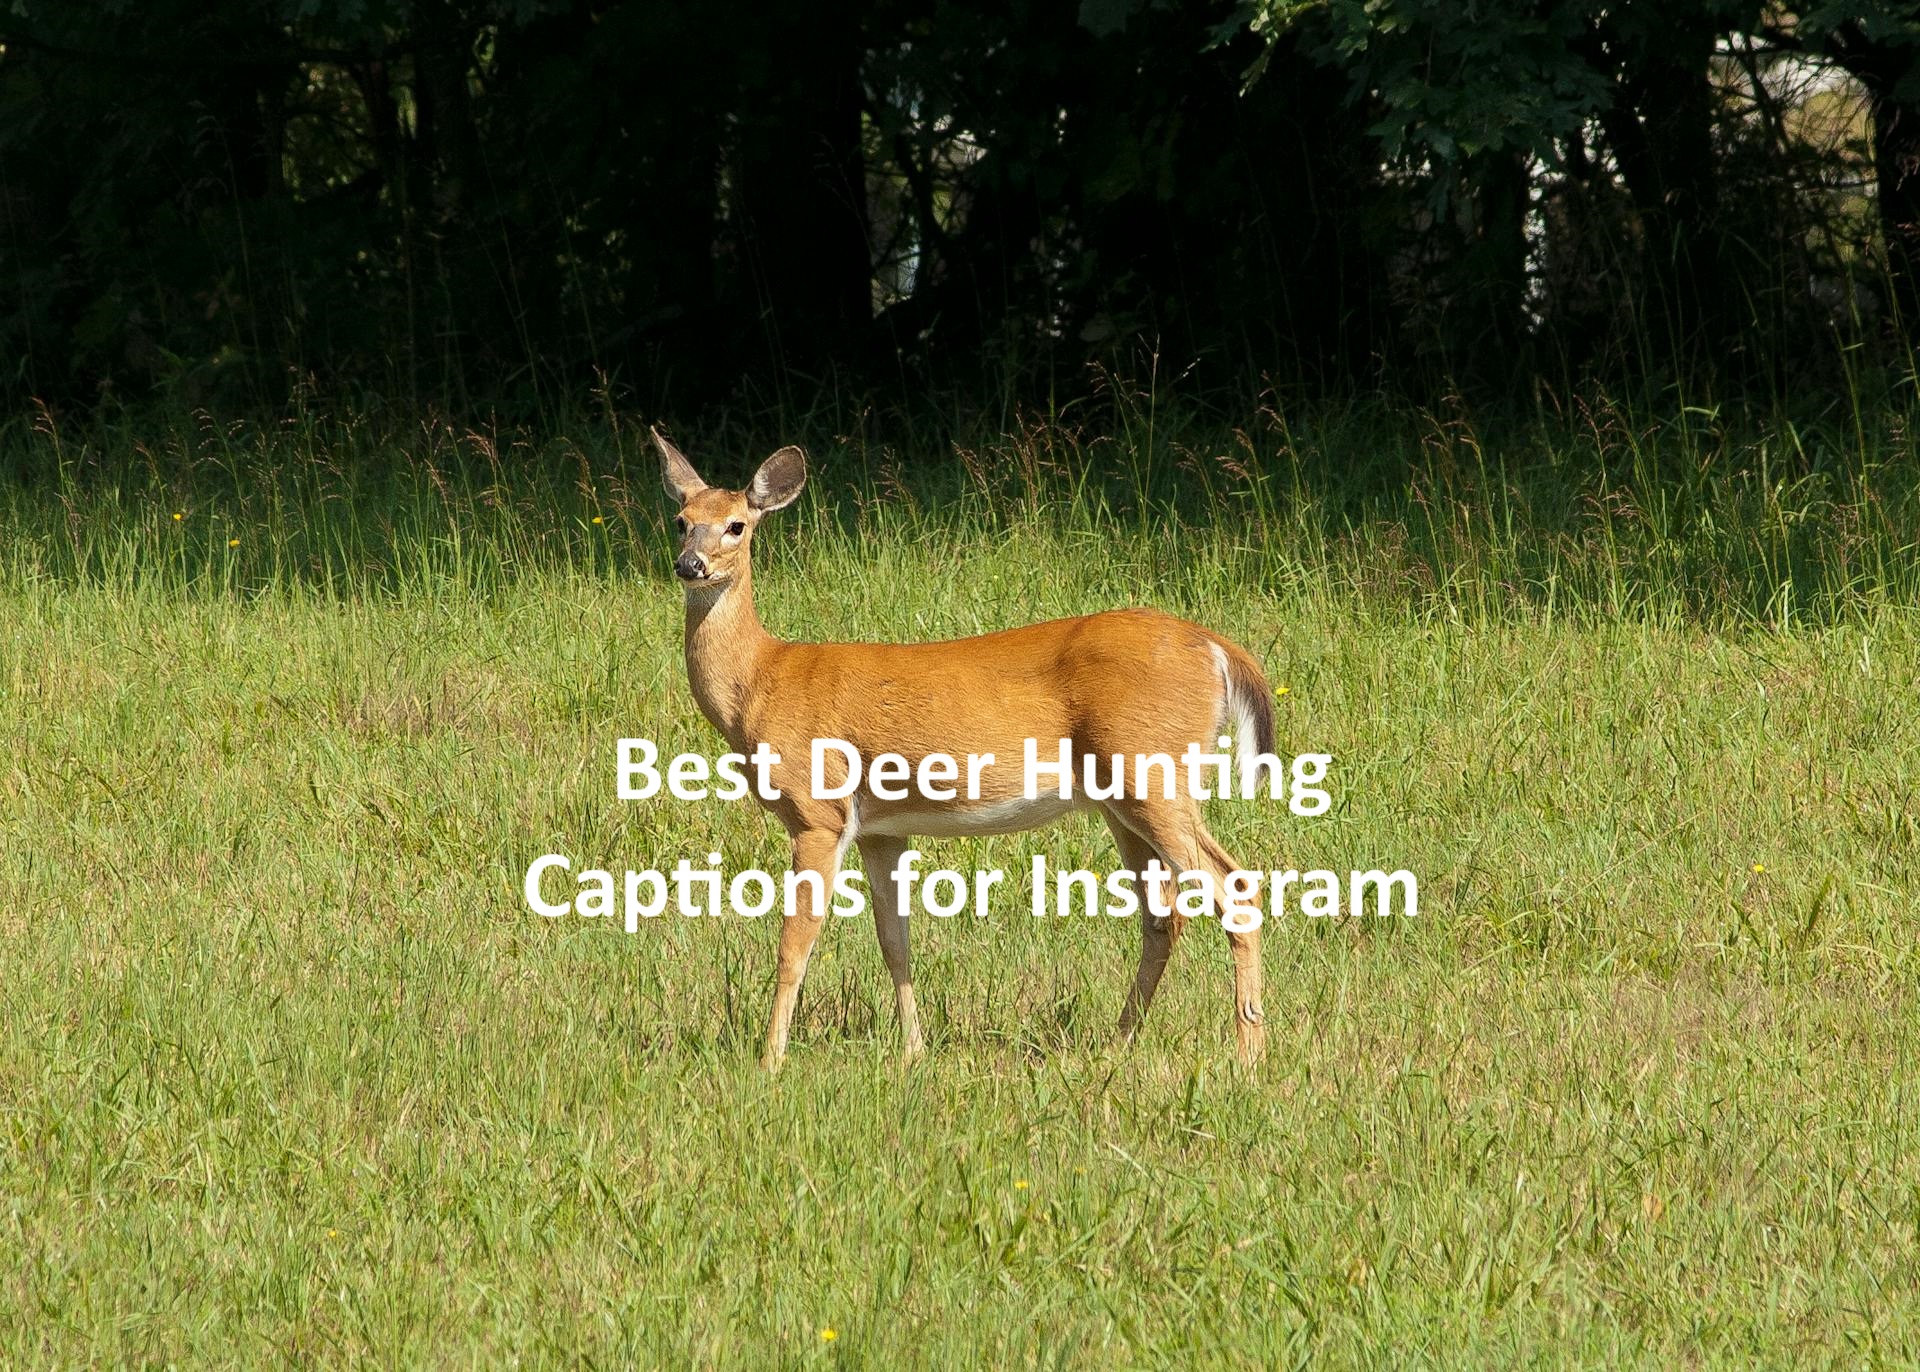 Deer Hunting Captions for Instagram